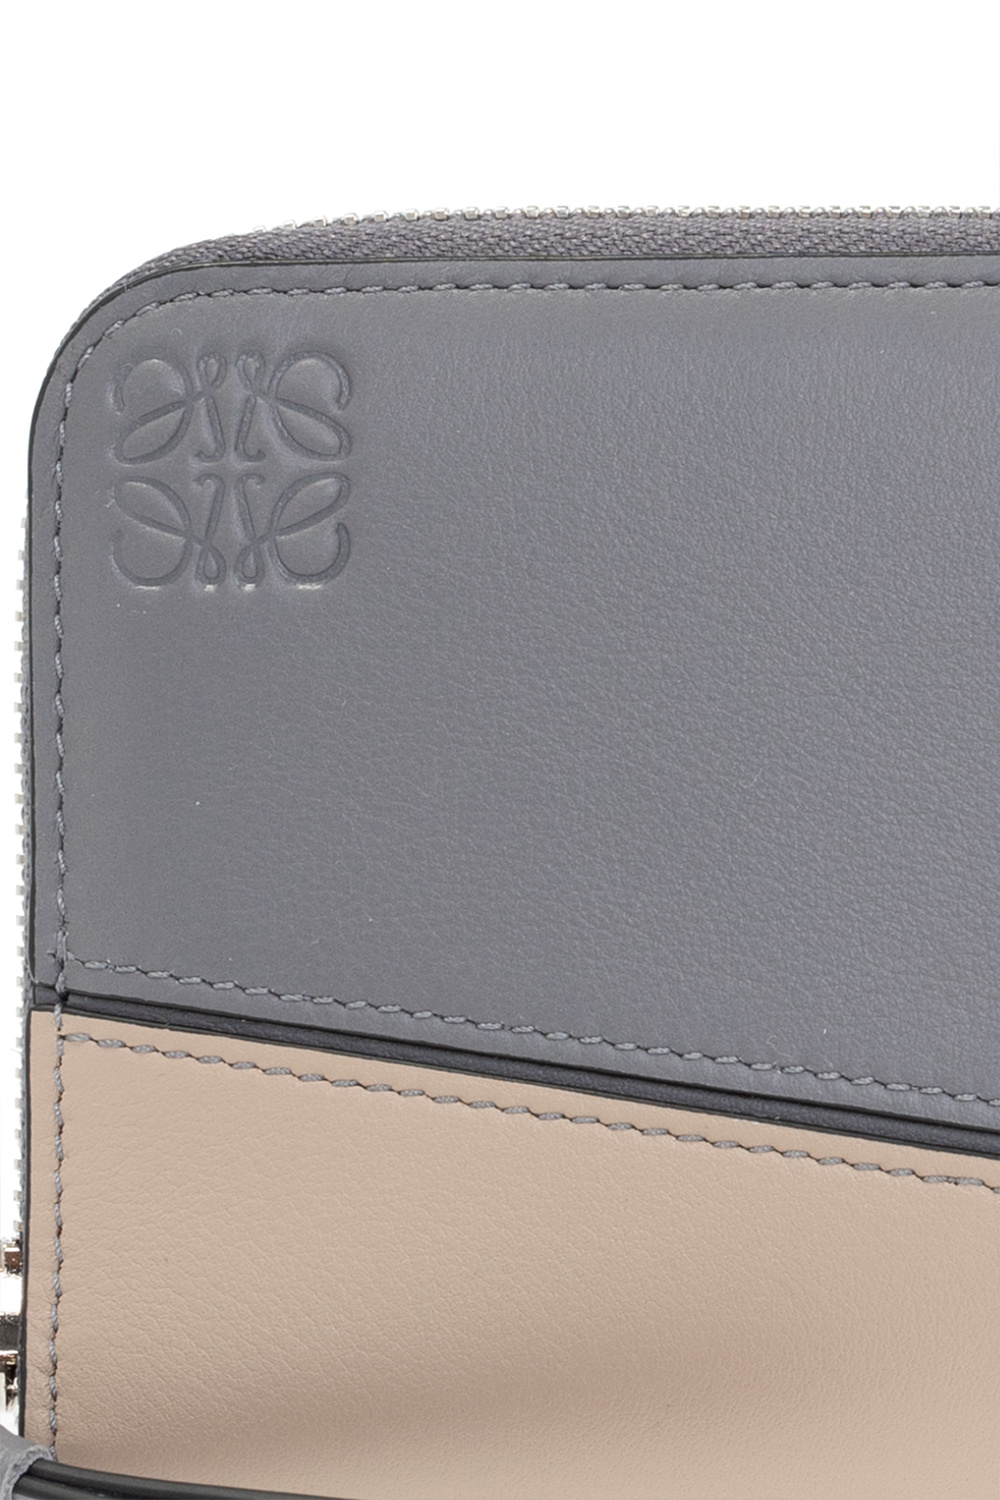 Loewe ‘Puzzle’ leather wallet